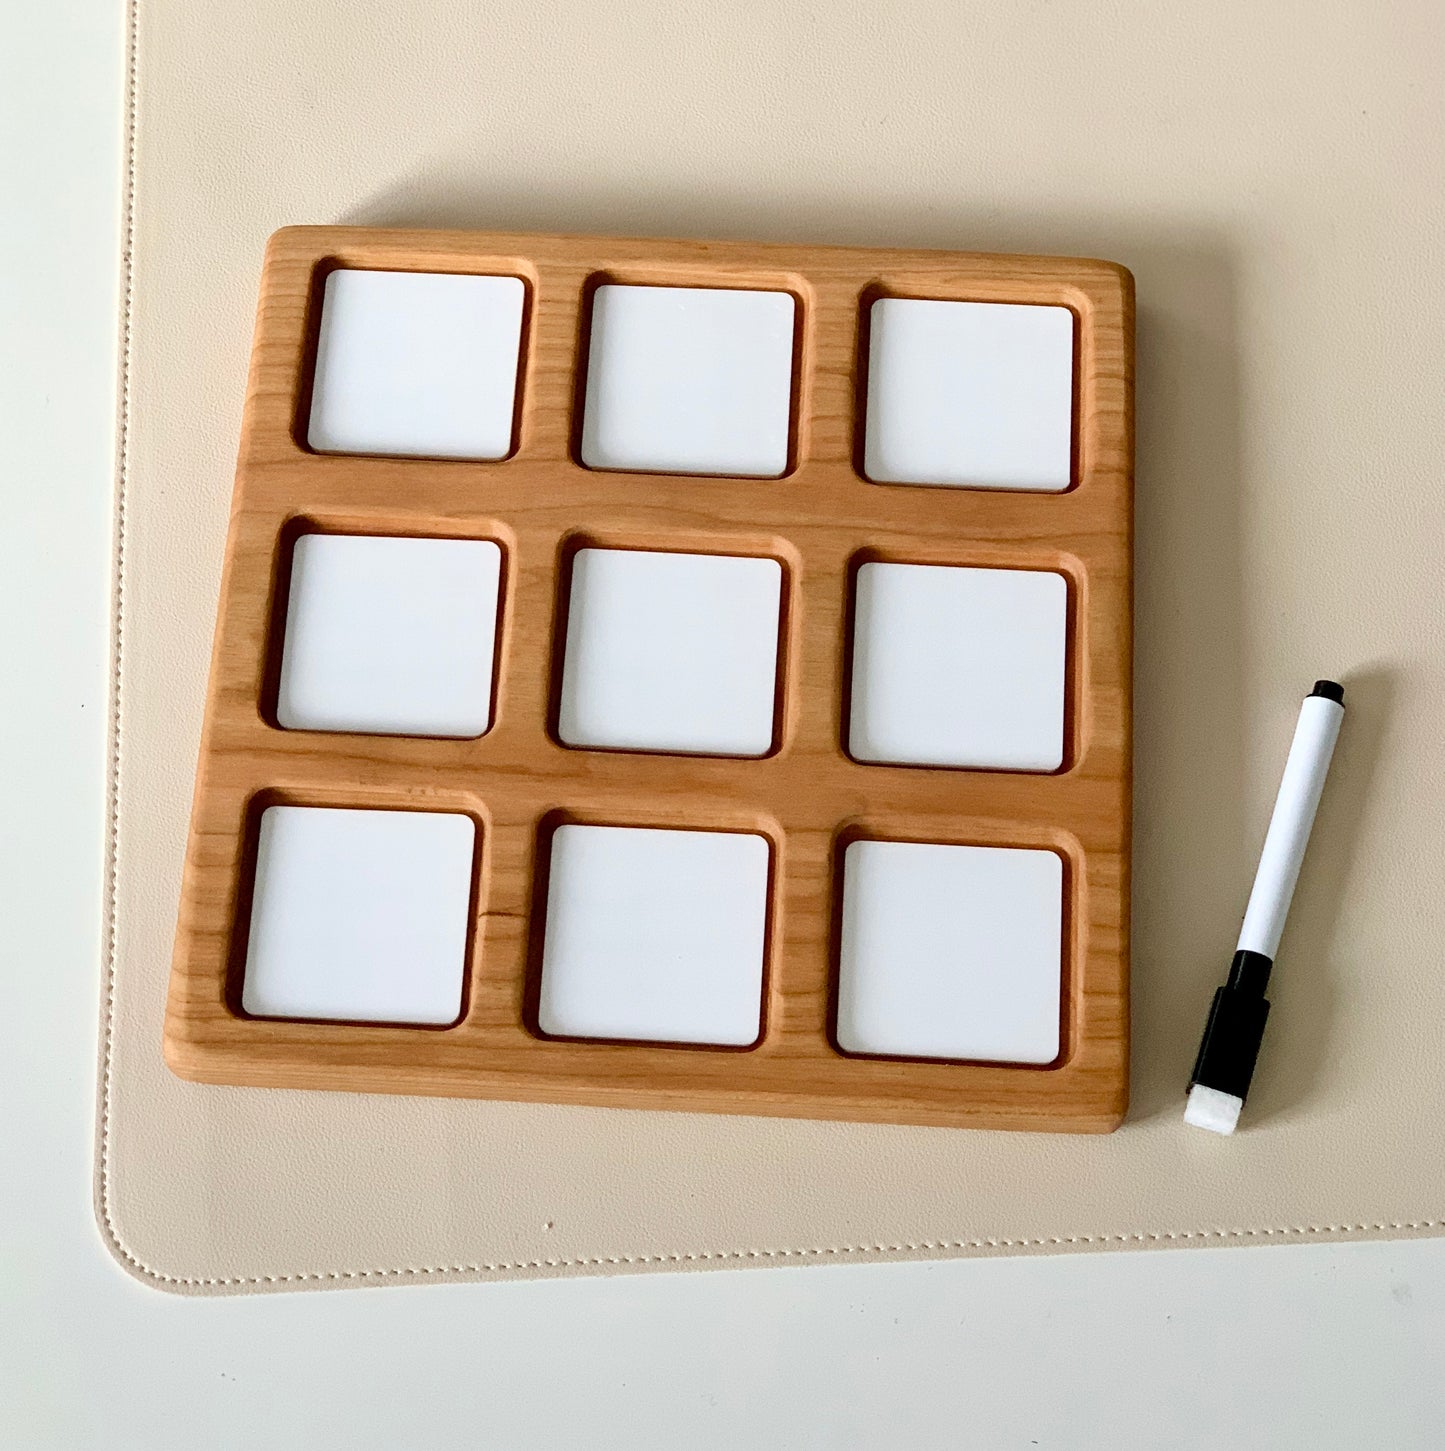 Wooden 3 x 3 Grid / 9 Frame / Tic Tac Toe Board / Sensory Tray